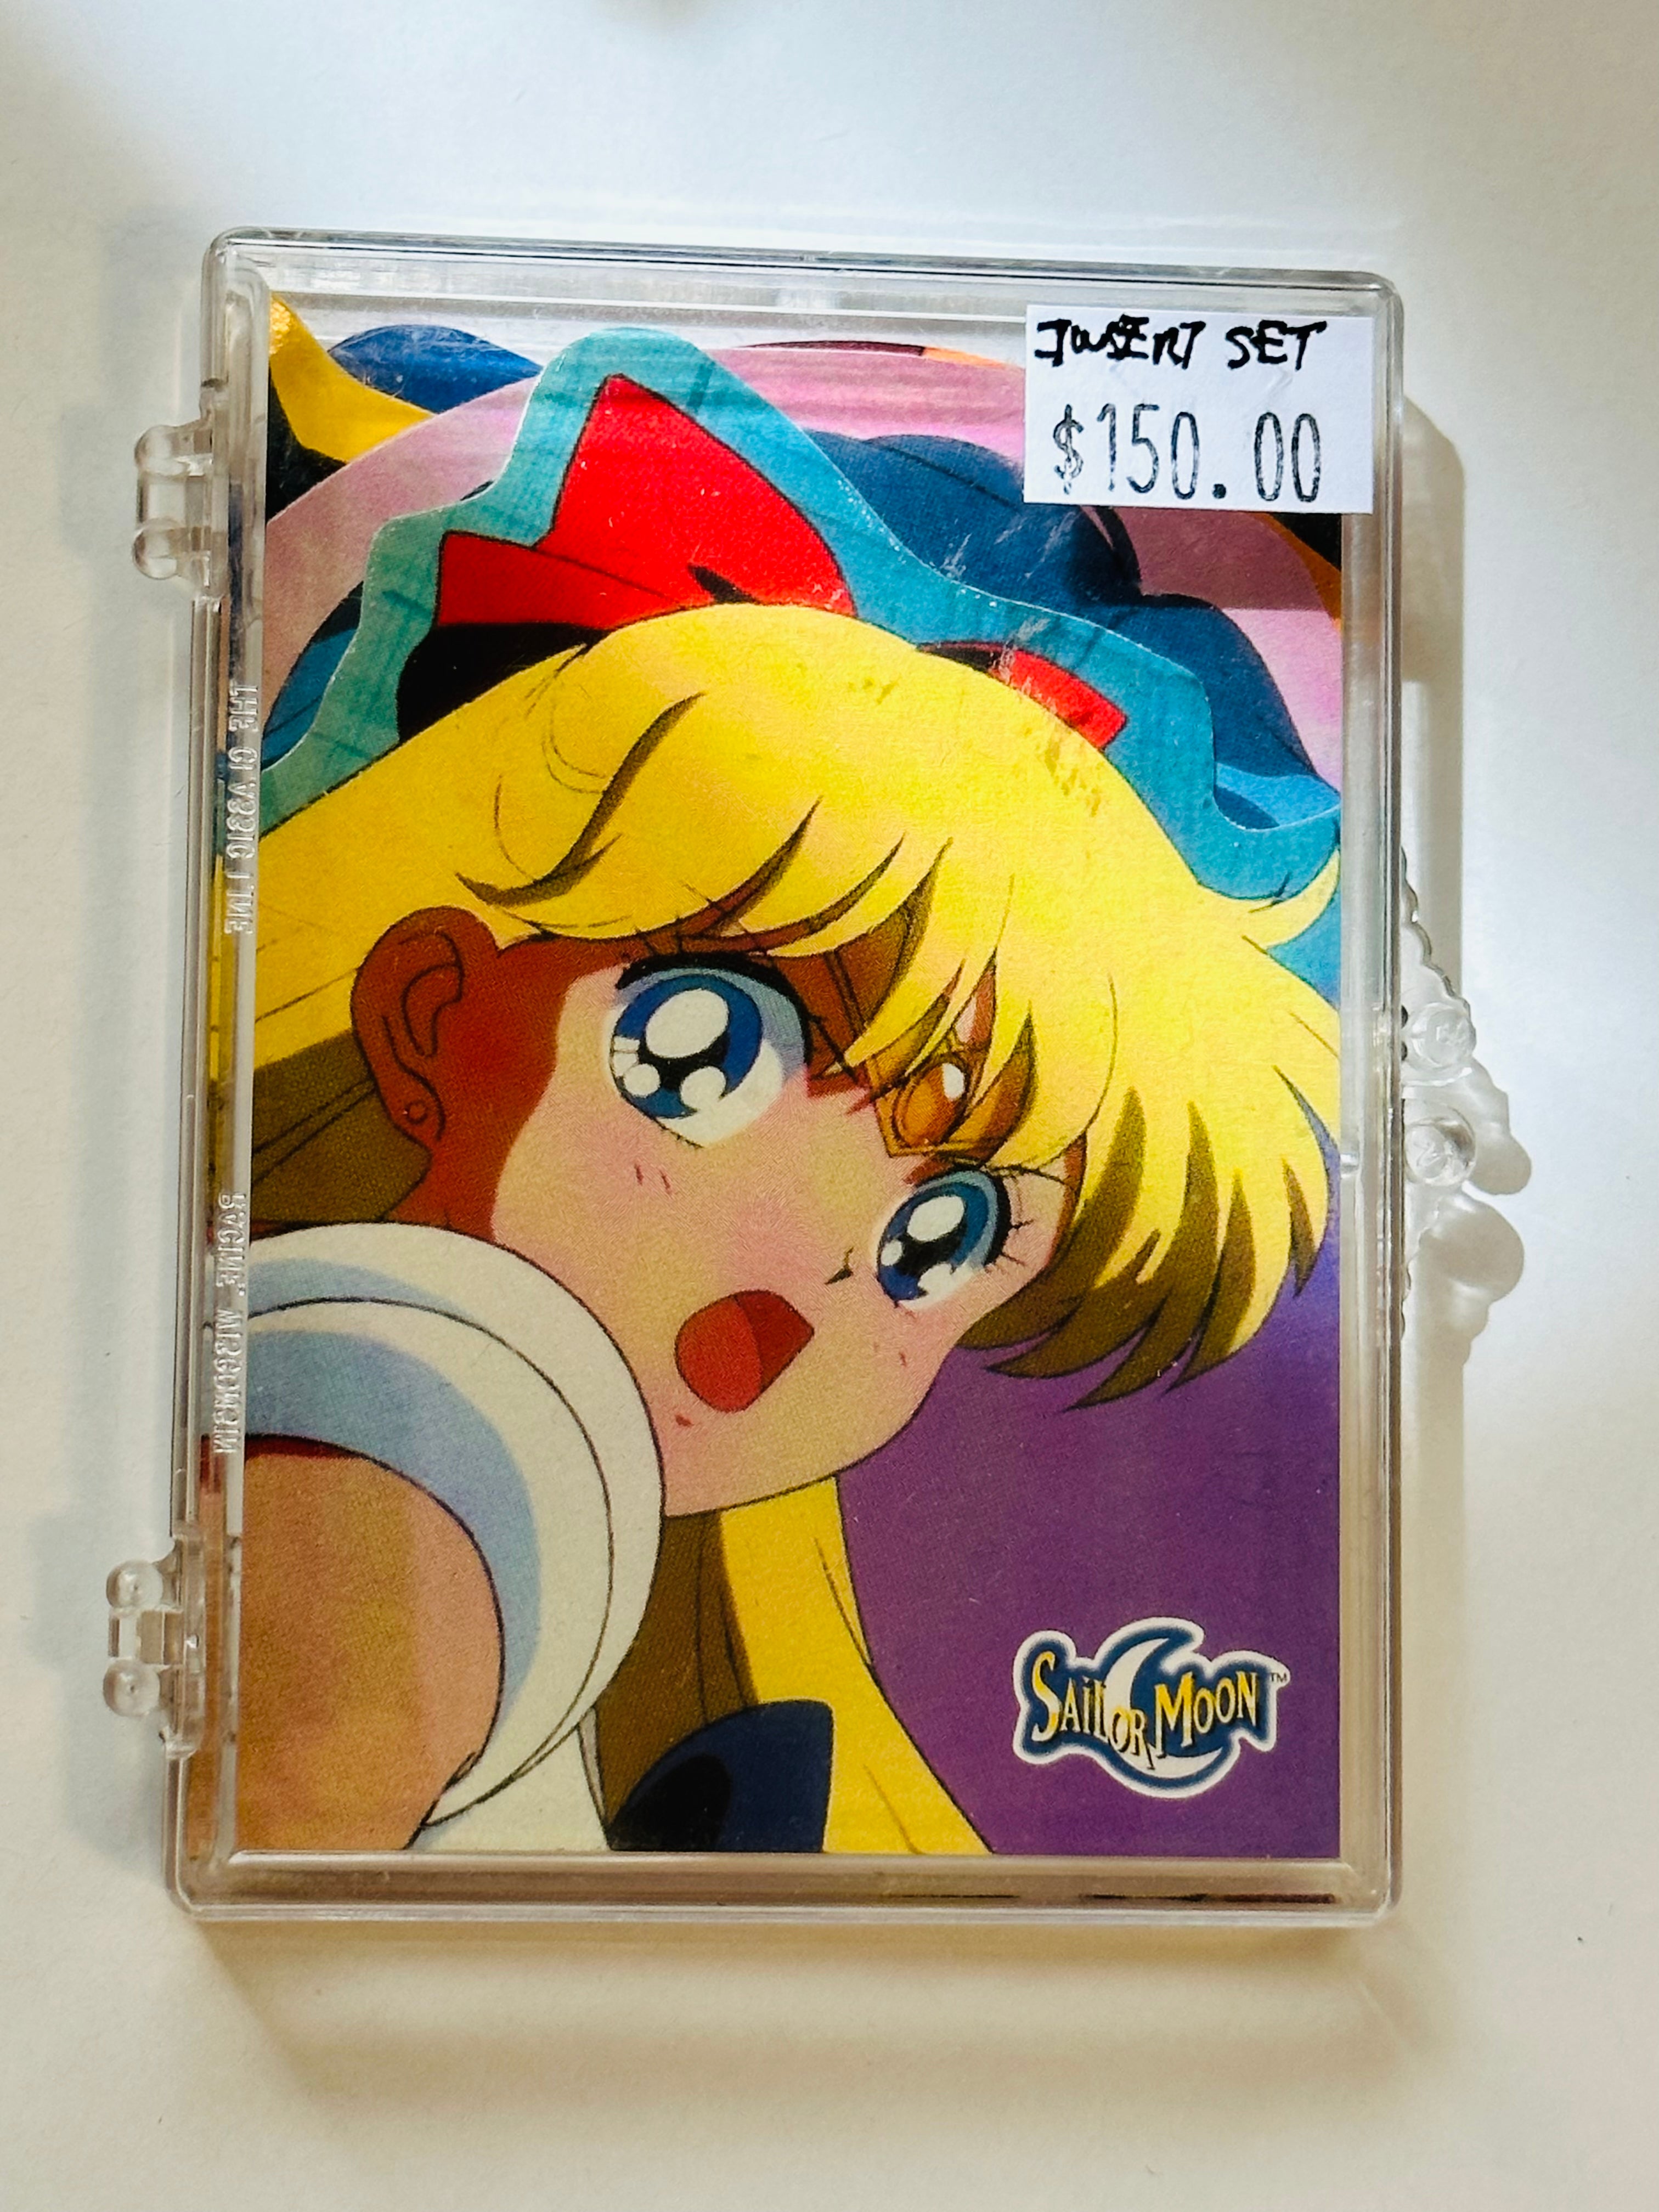 Sailor Moon Dart rare die-cut insert cards set 1997